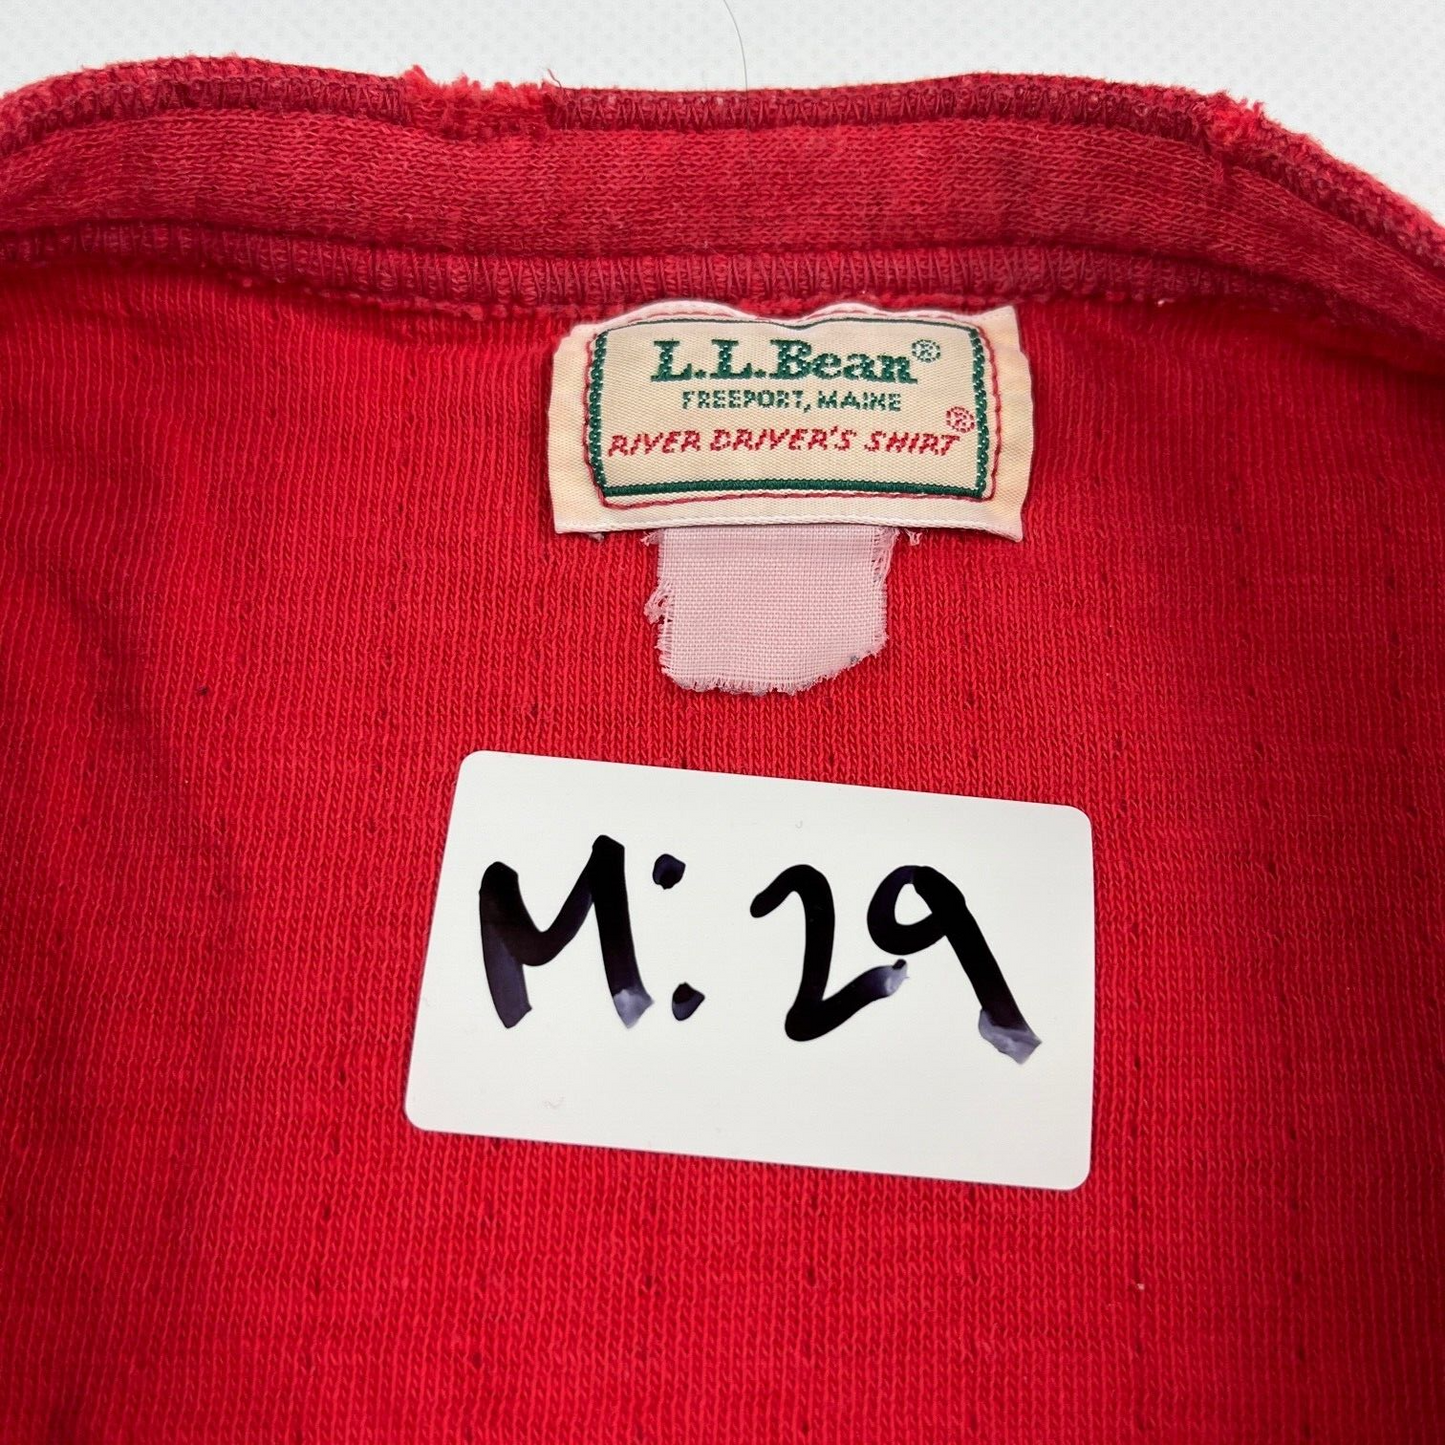 VINTAGE L.L. Bean Longsleeve Red Shirt Adult Medium Men 90s